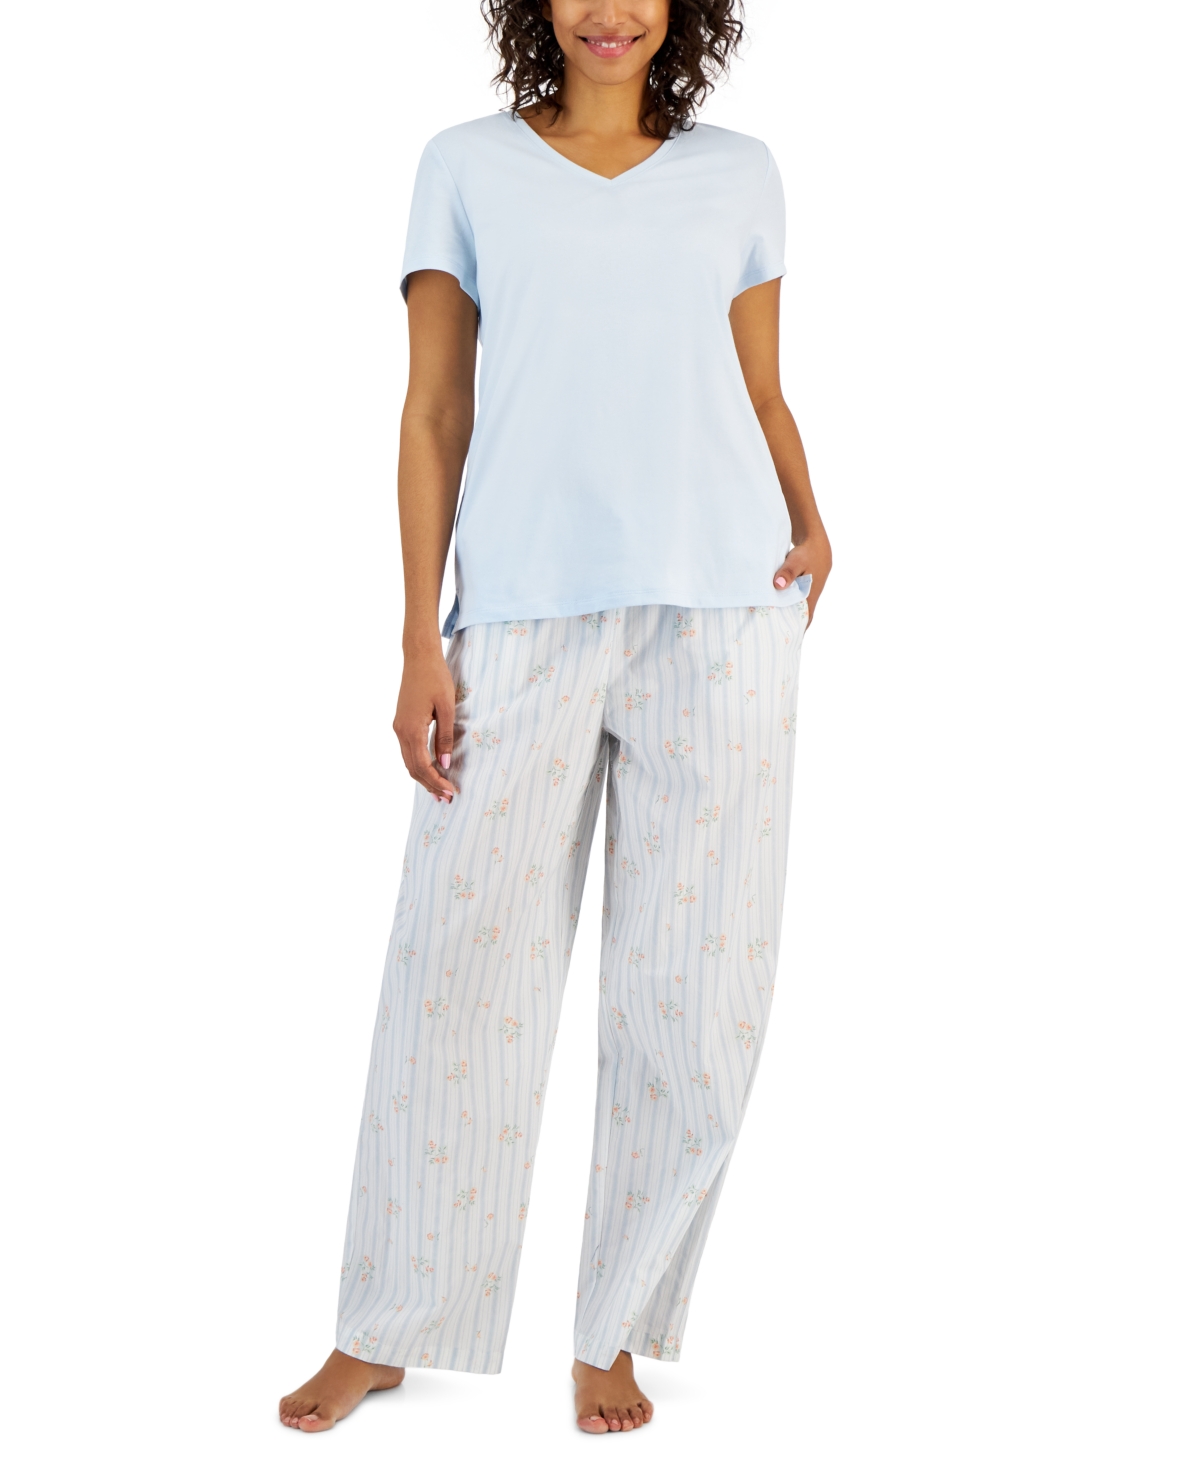 Charter Club Women's Capri Cropped Cotton Pajama Pants Vineyard